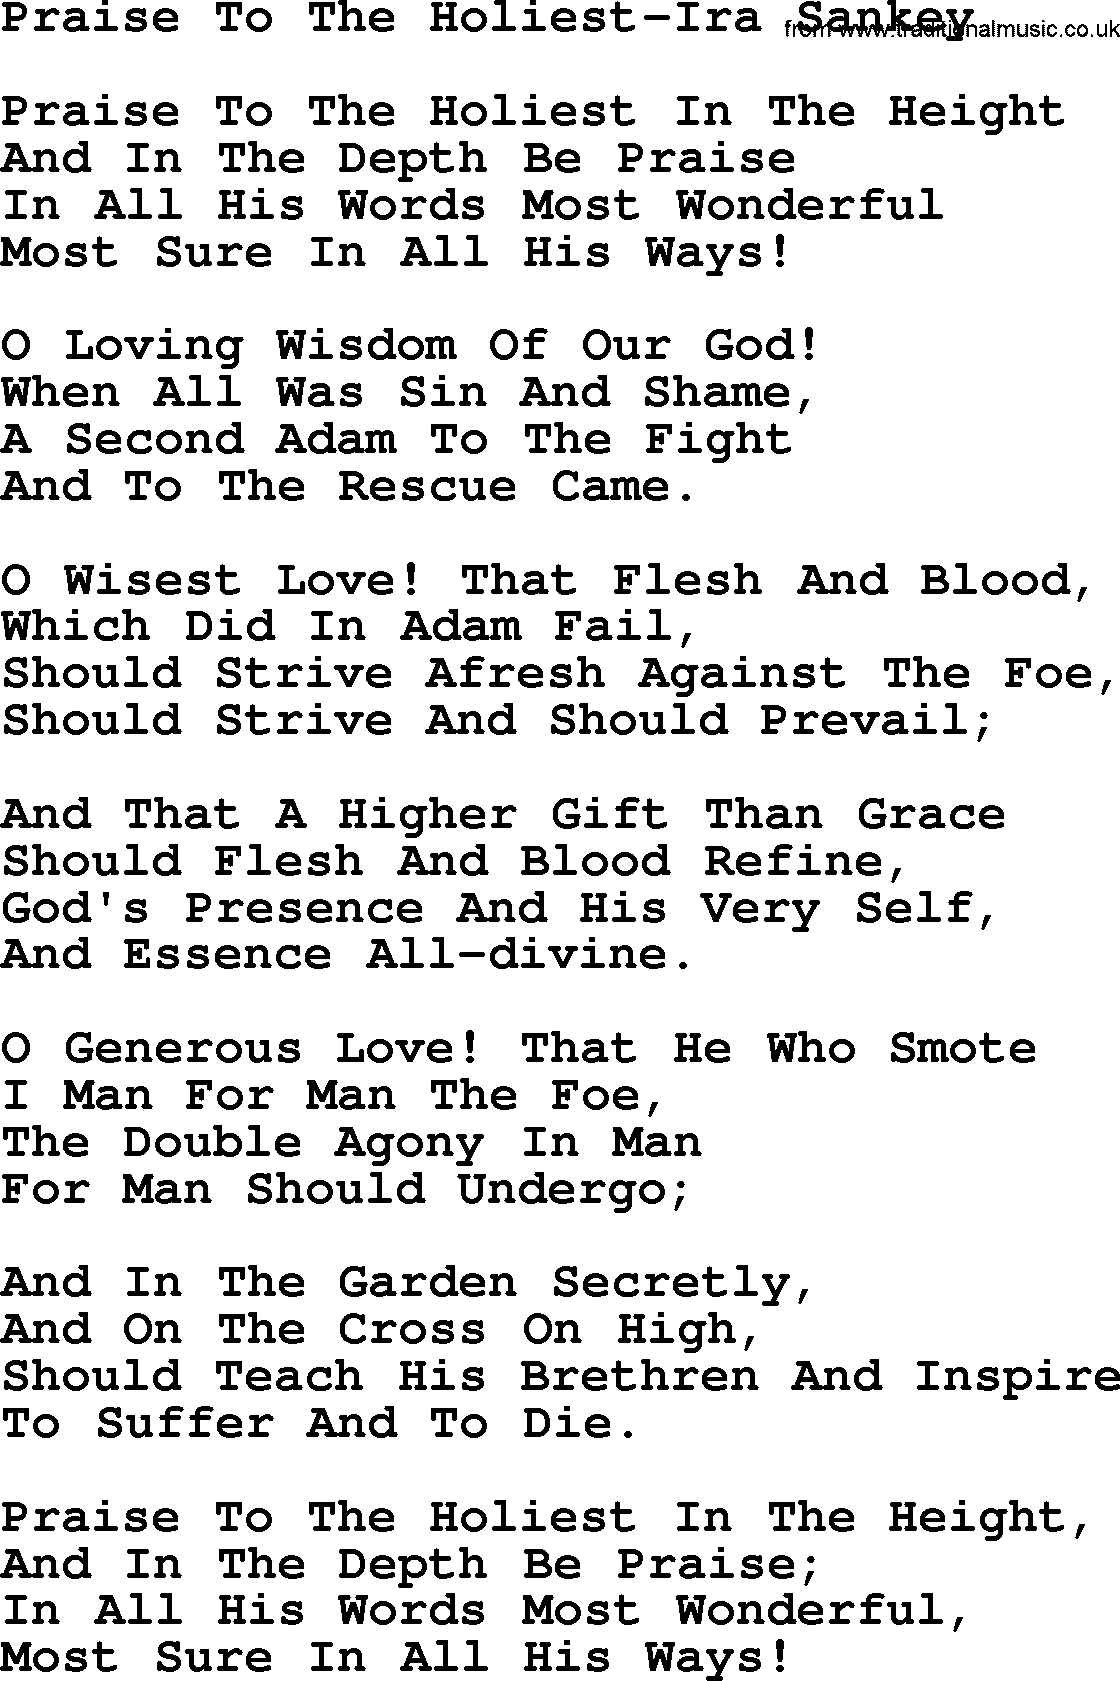 Ira Sankey hymn: Praise To The Holiest-Ira Sankey, lyrics